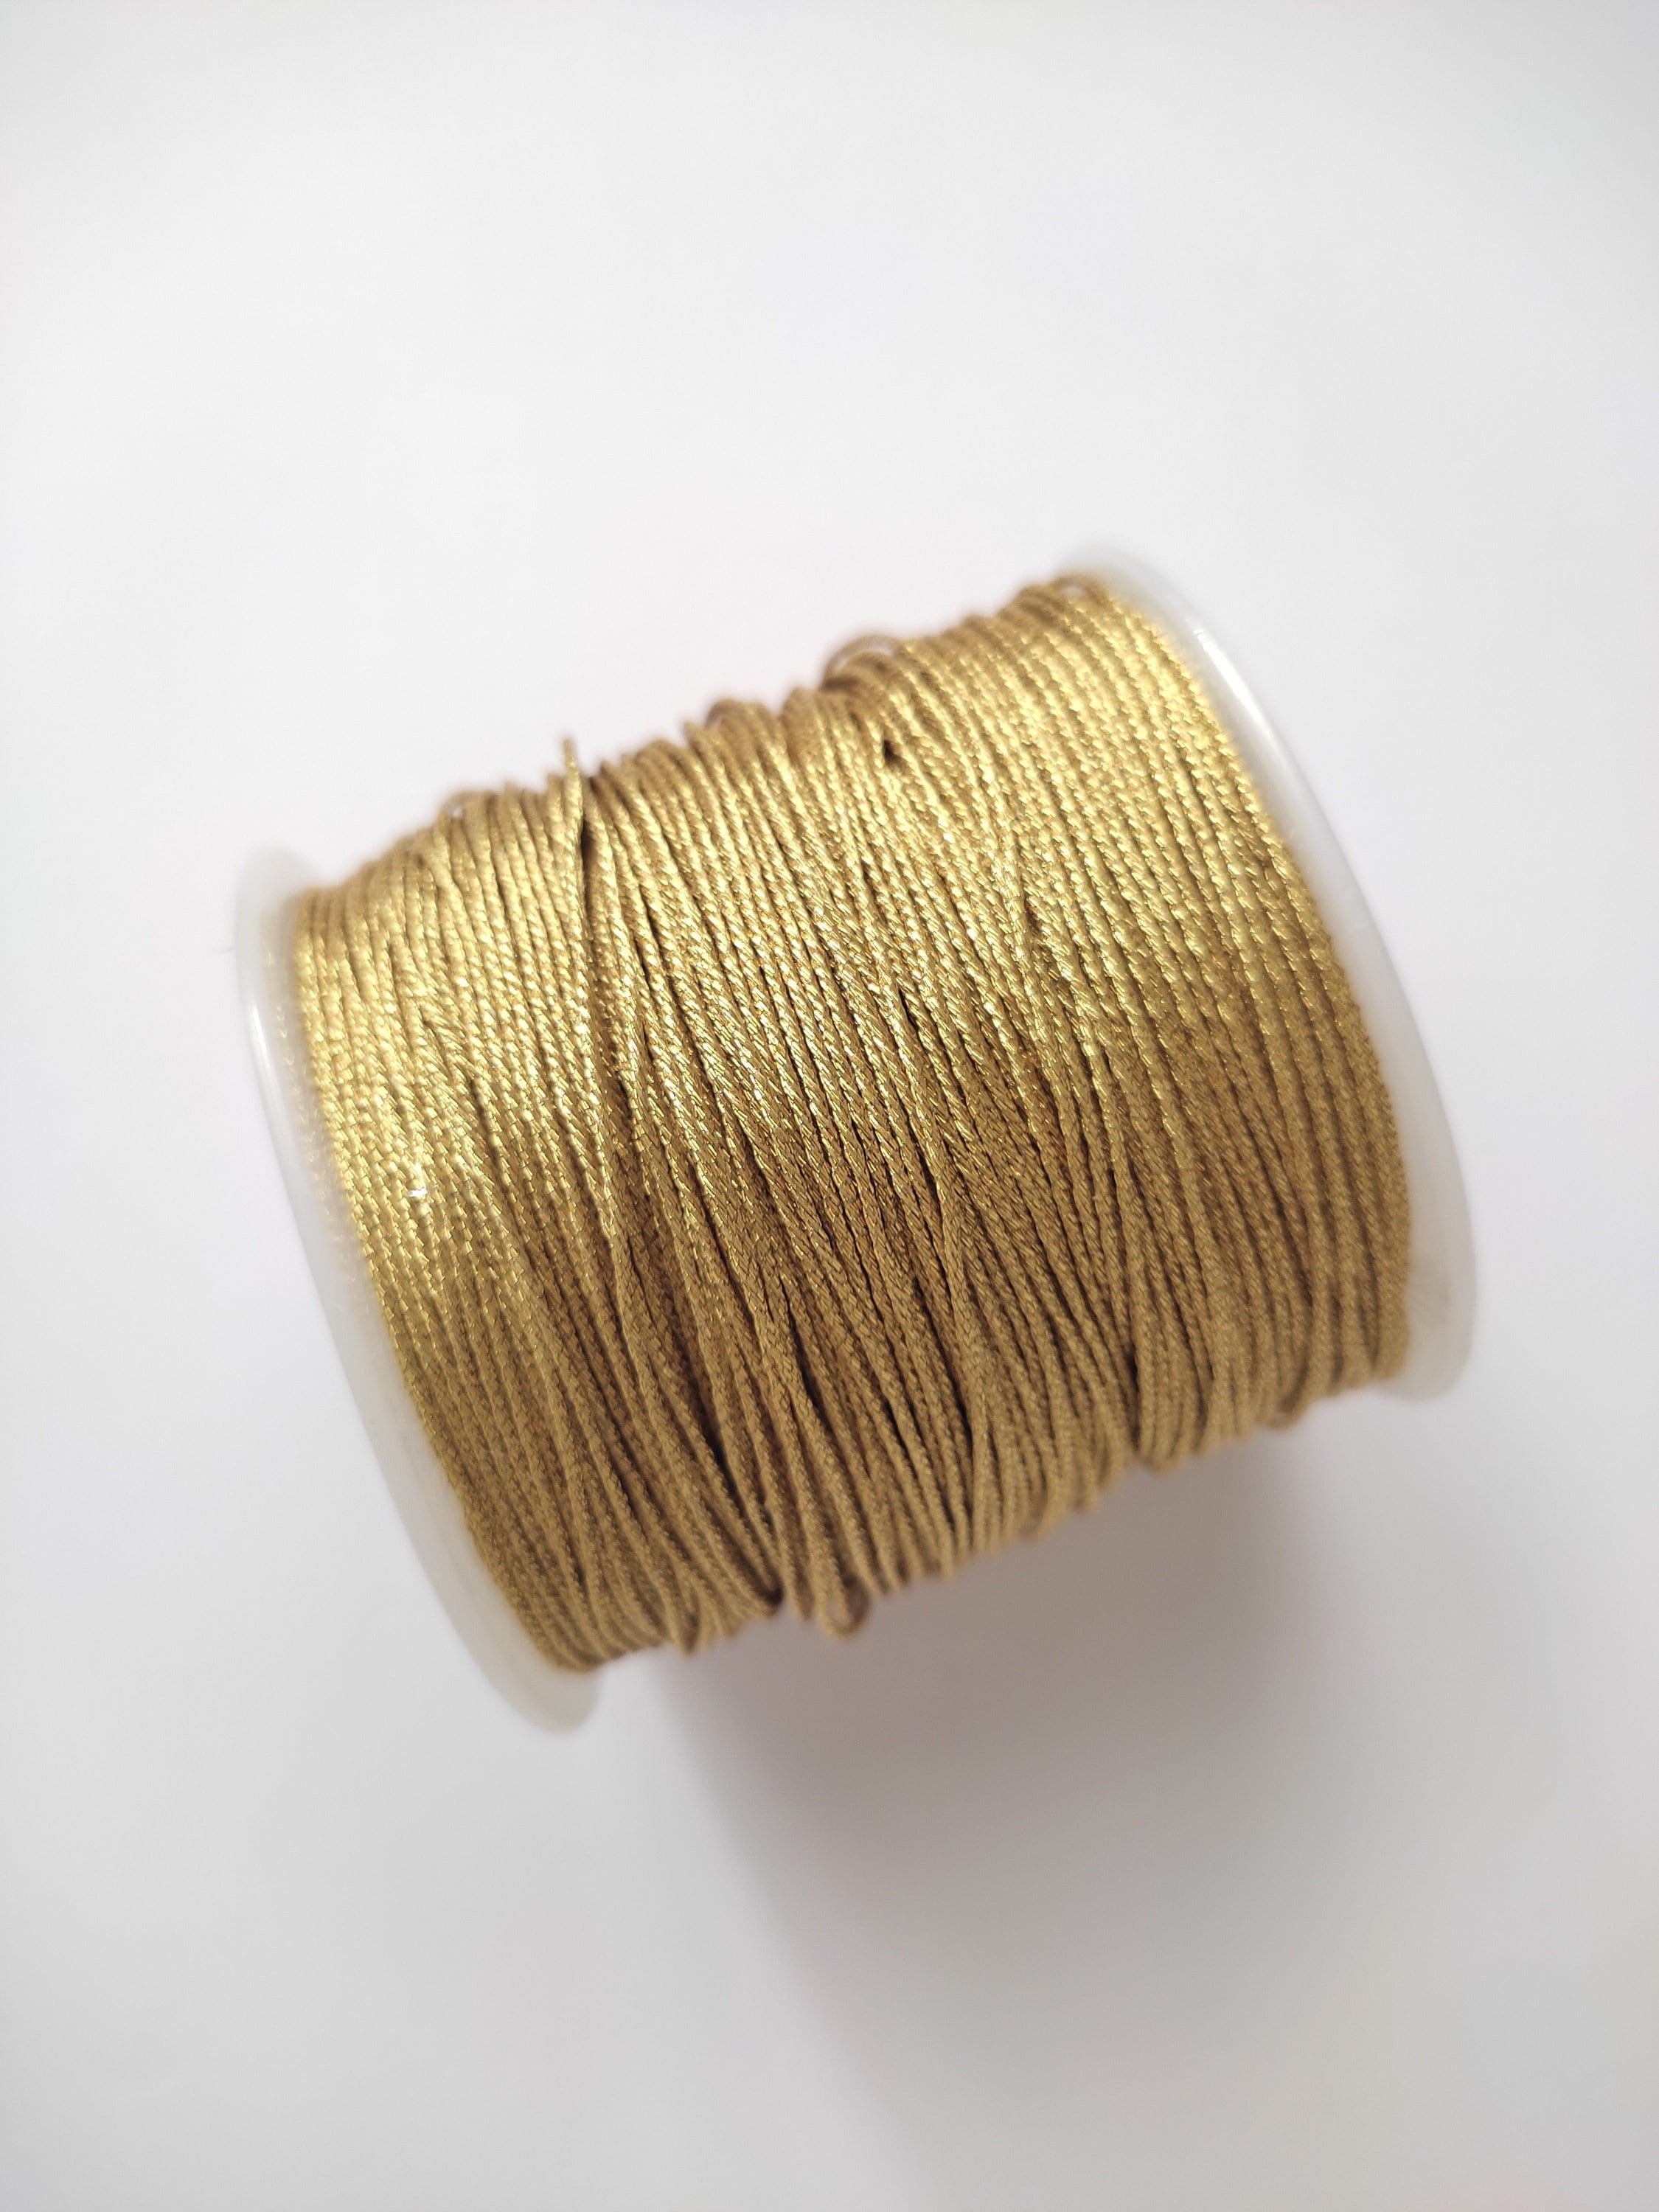 Metallic gold thread, original thread, Couture thread, embroidery, gold  thread, metallic thread, diameter 0.8mm, 5/10 meters G0923